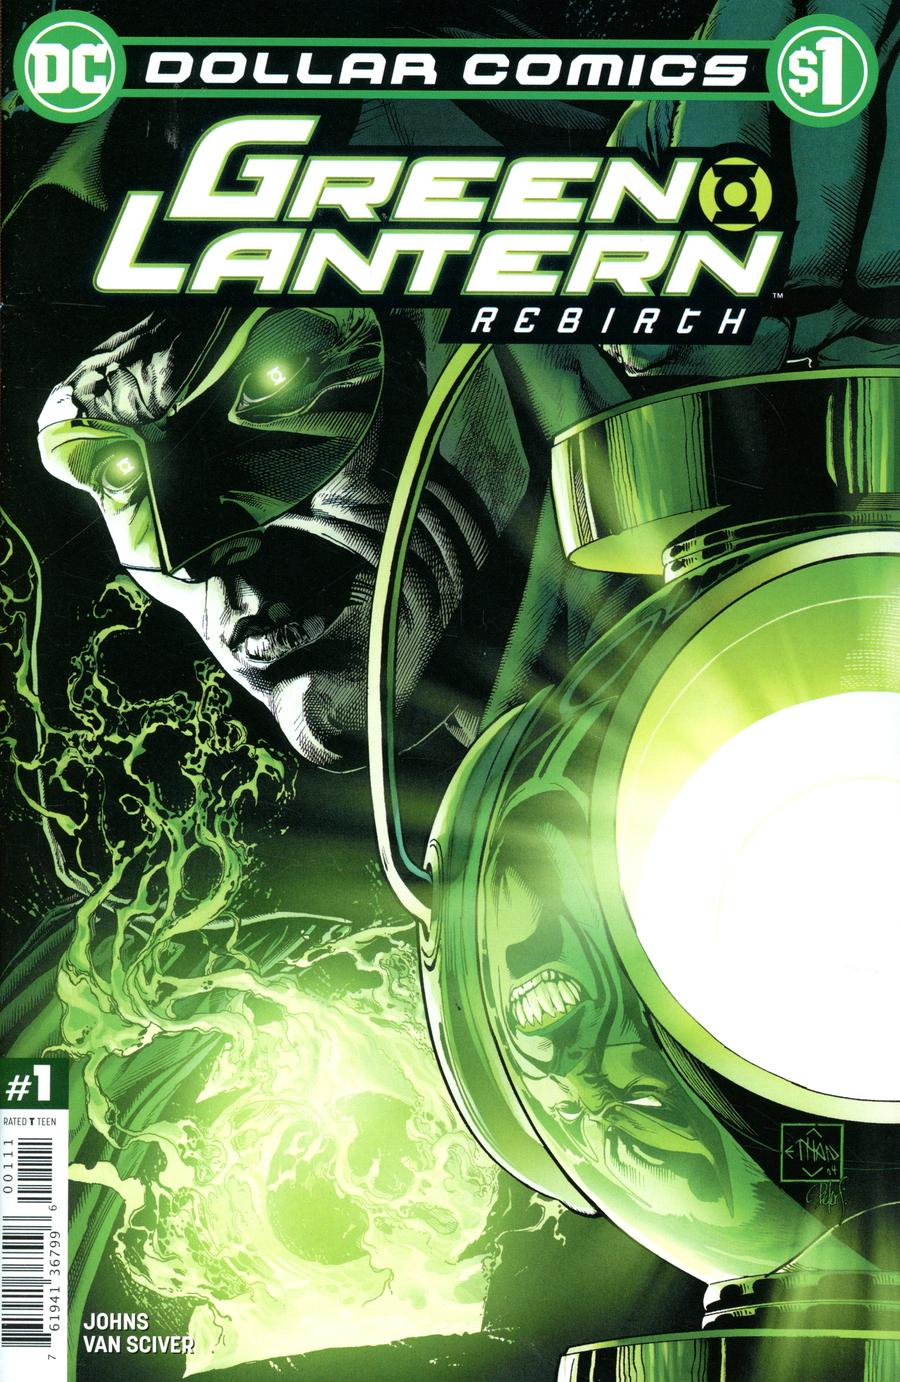 Dollar Comics Green Lantern Rebirth #1